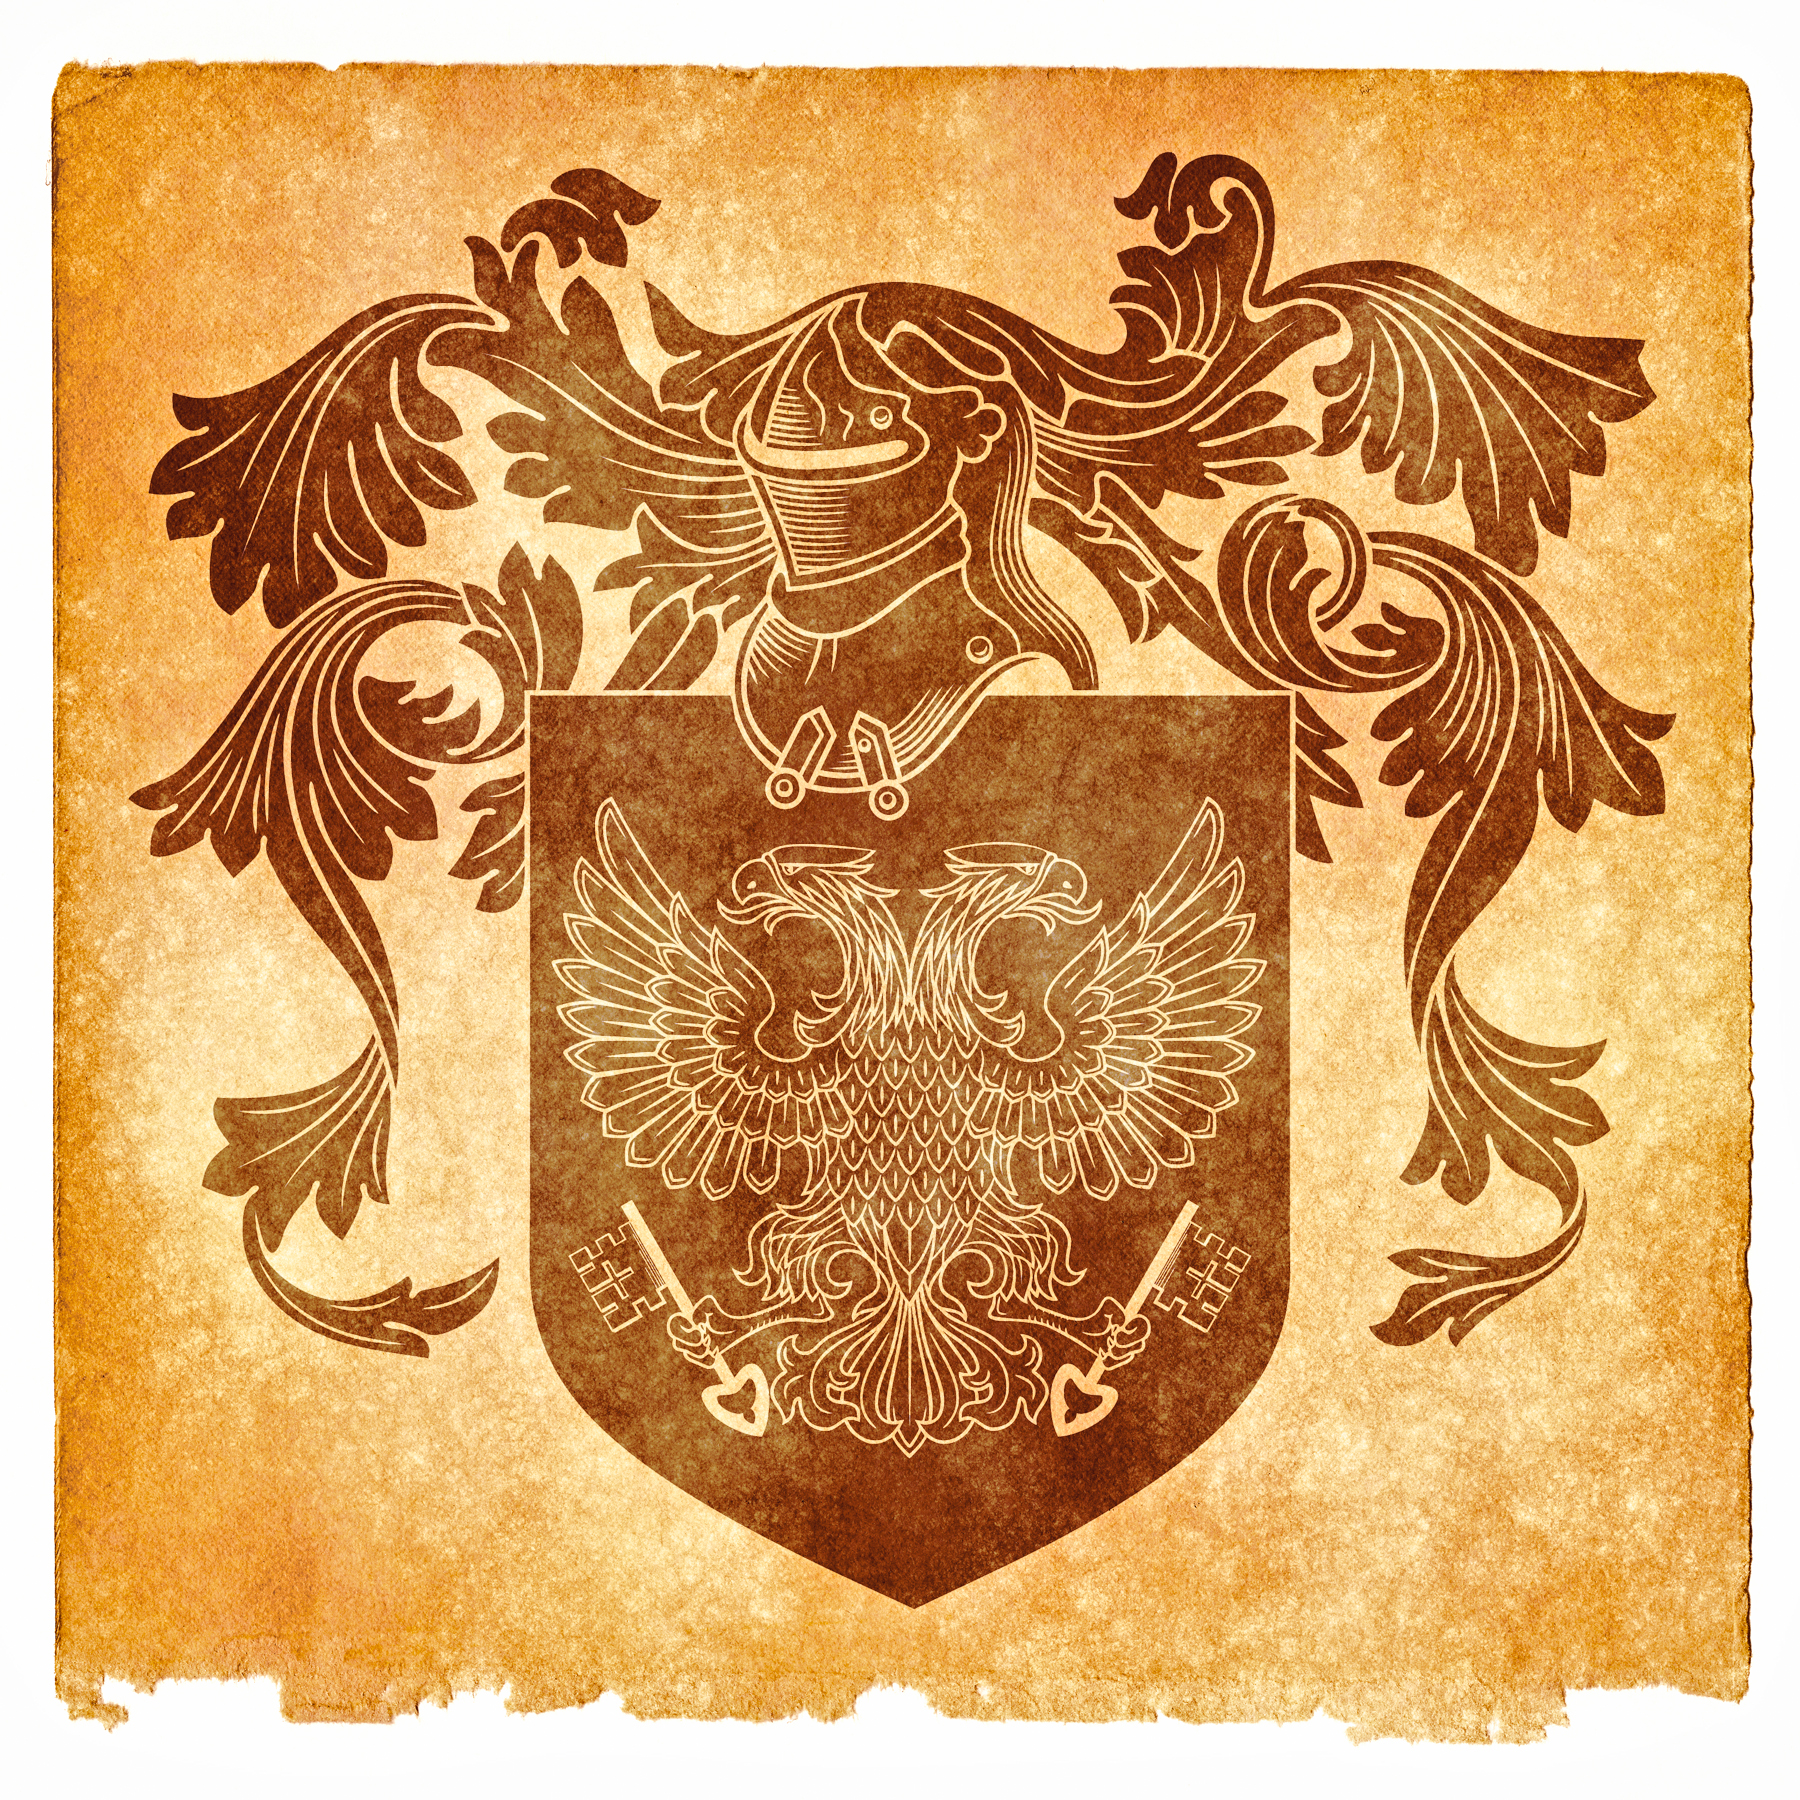 Double-headed eagle grunge emblem, sepia photo